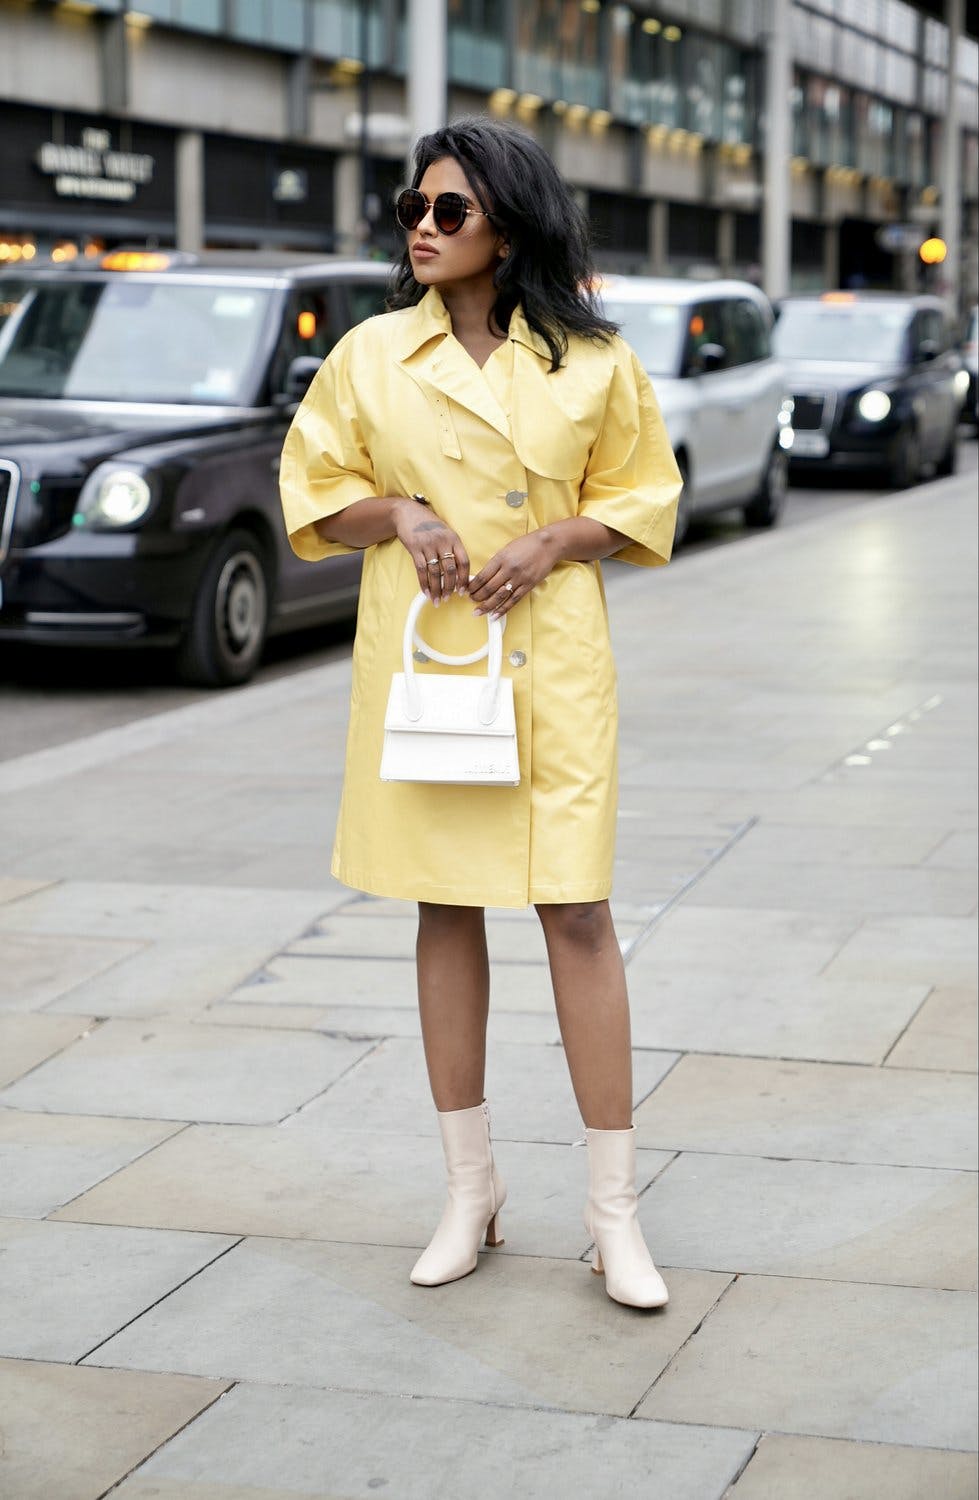 Sachini Dilanka wearing maxmara during London Fashion Week